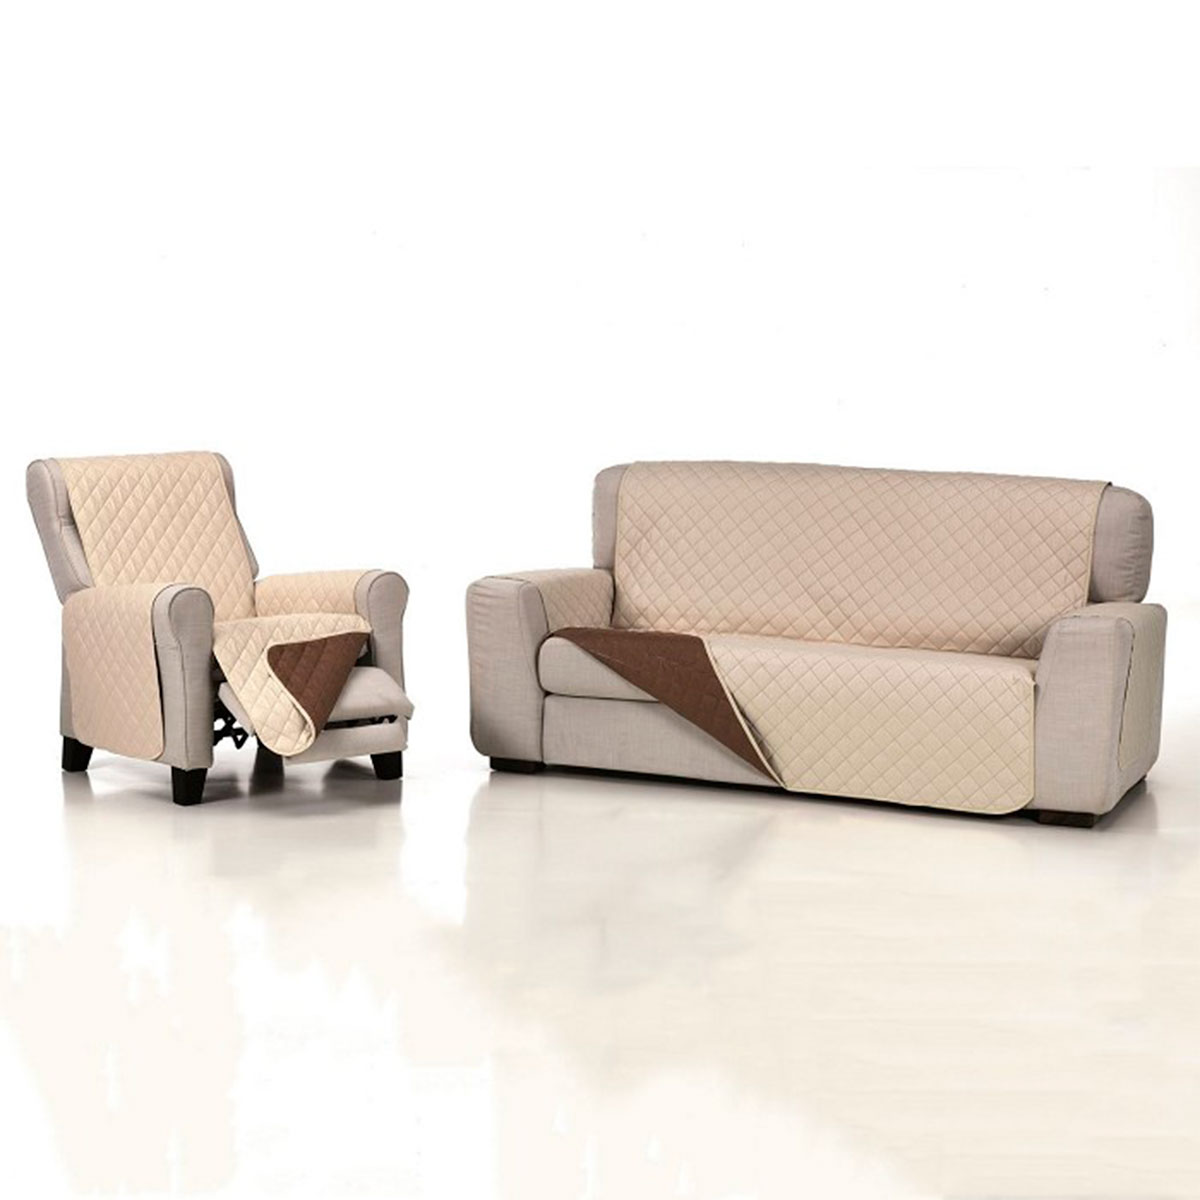 Cubre sofa Beige marron sillon fondo blanco